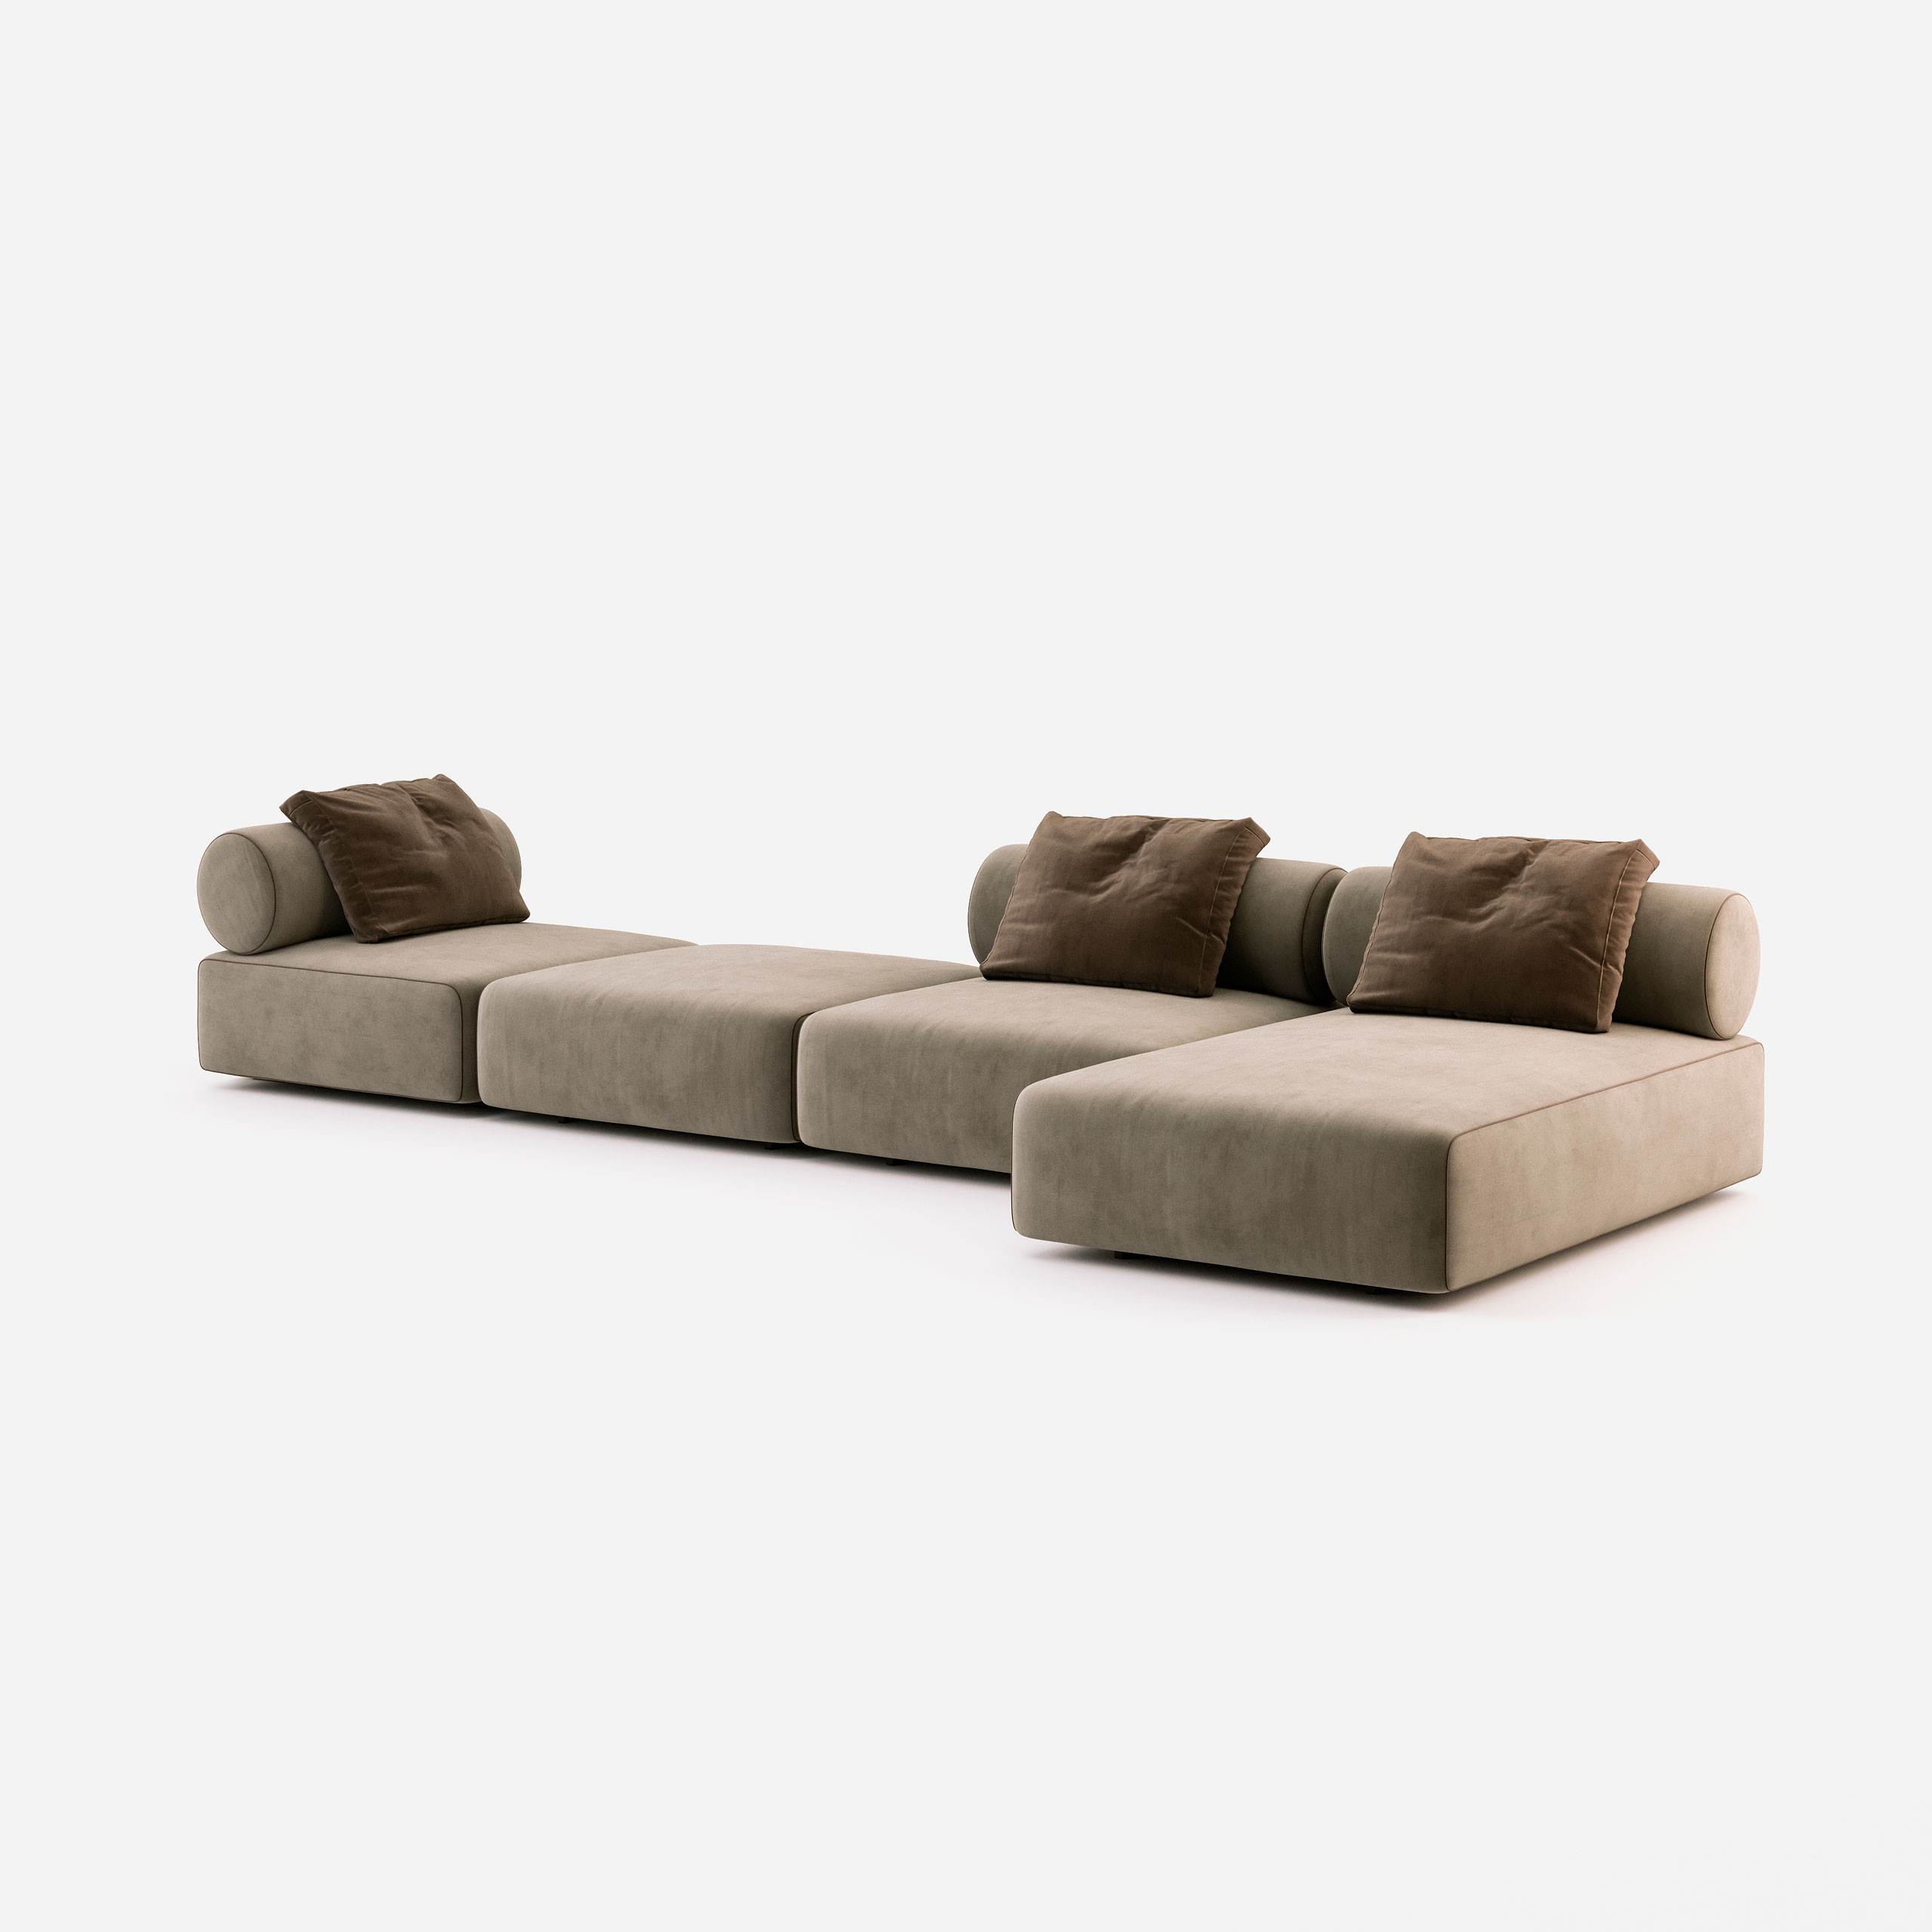 shinto-sofa-domkapa-new-collection-2021-living-room-decor